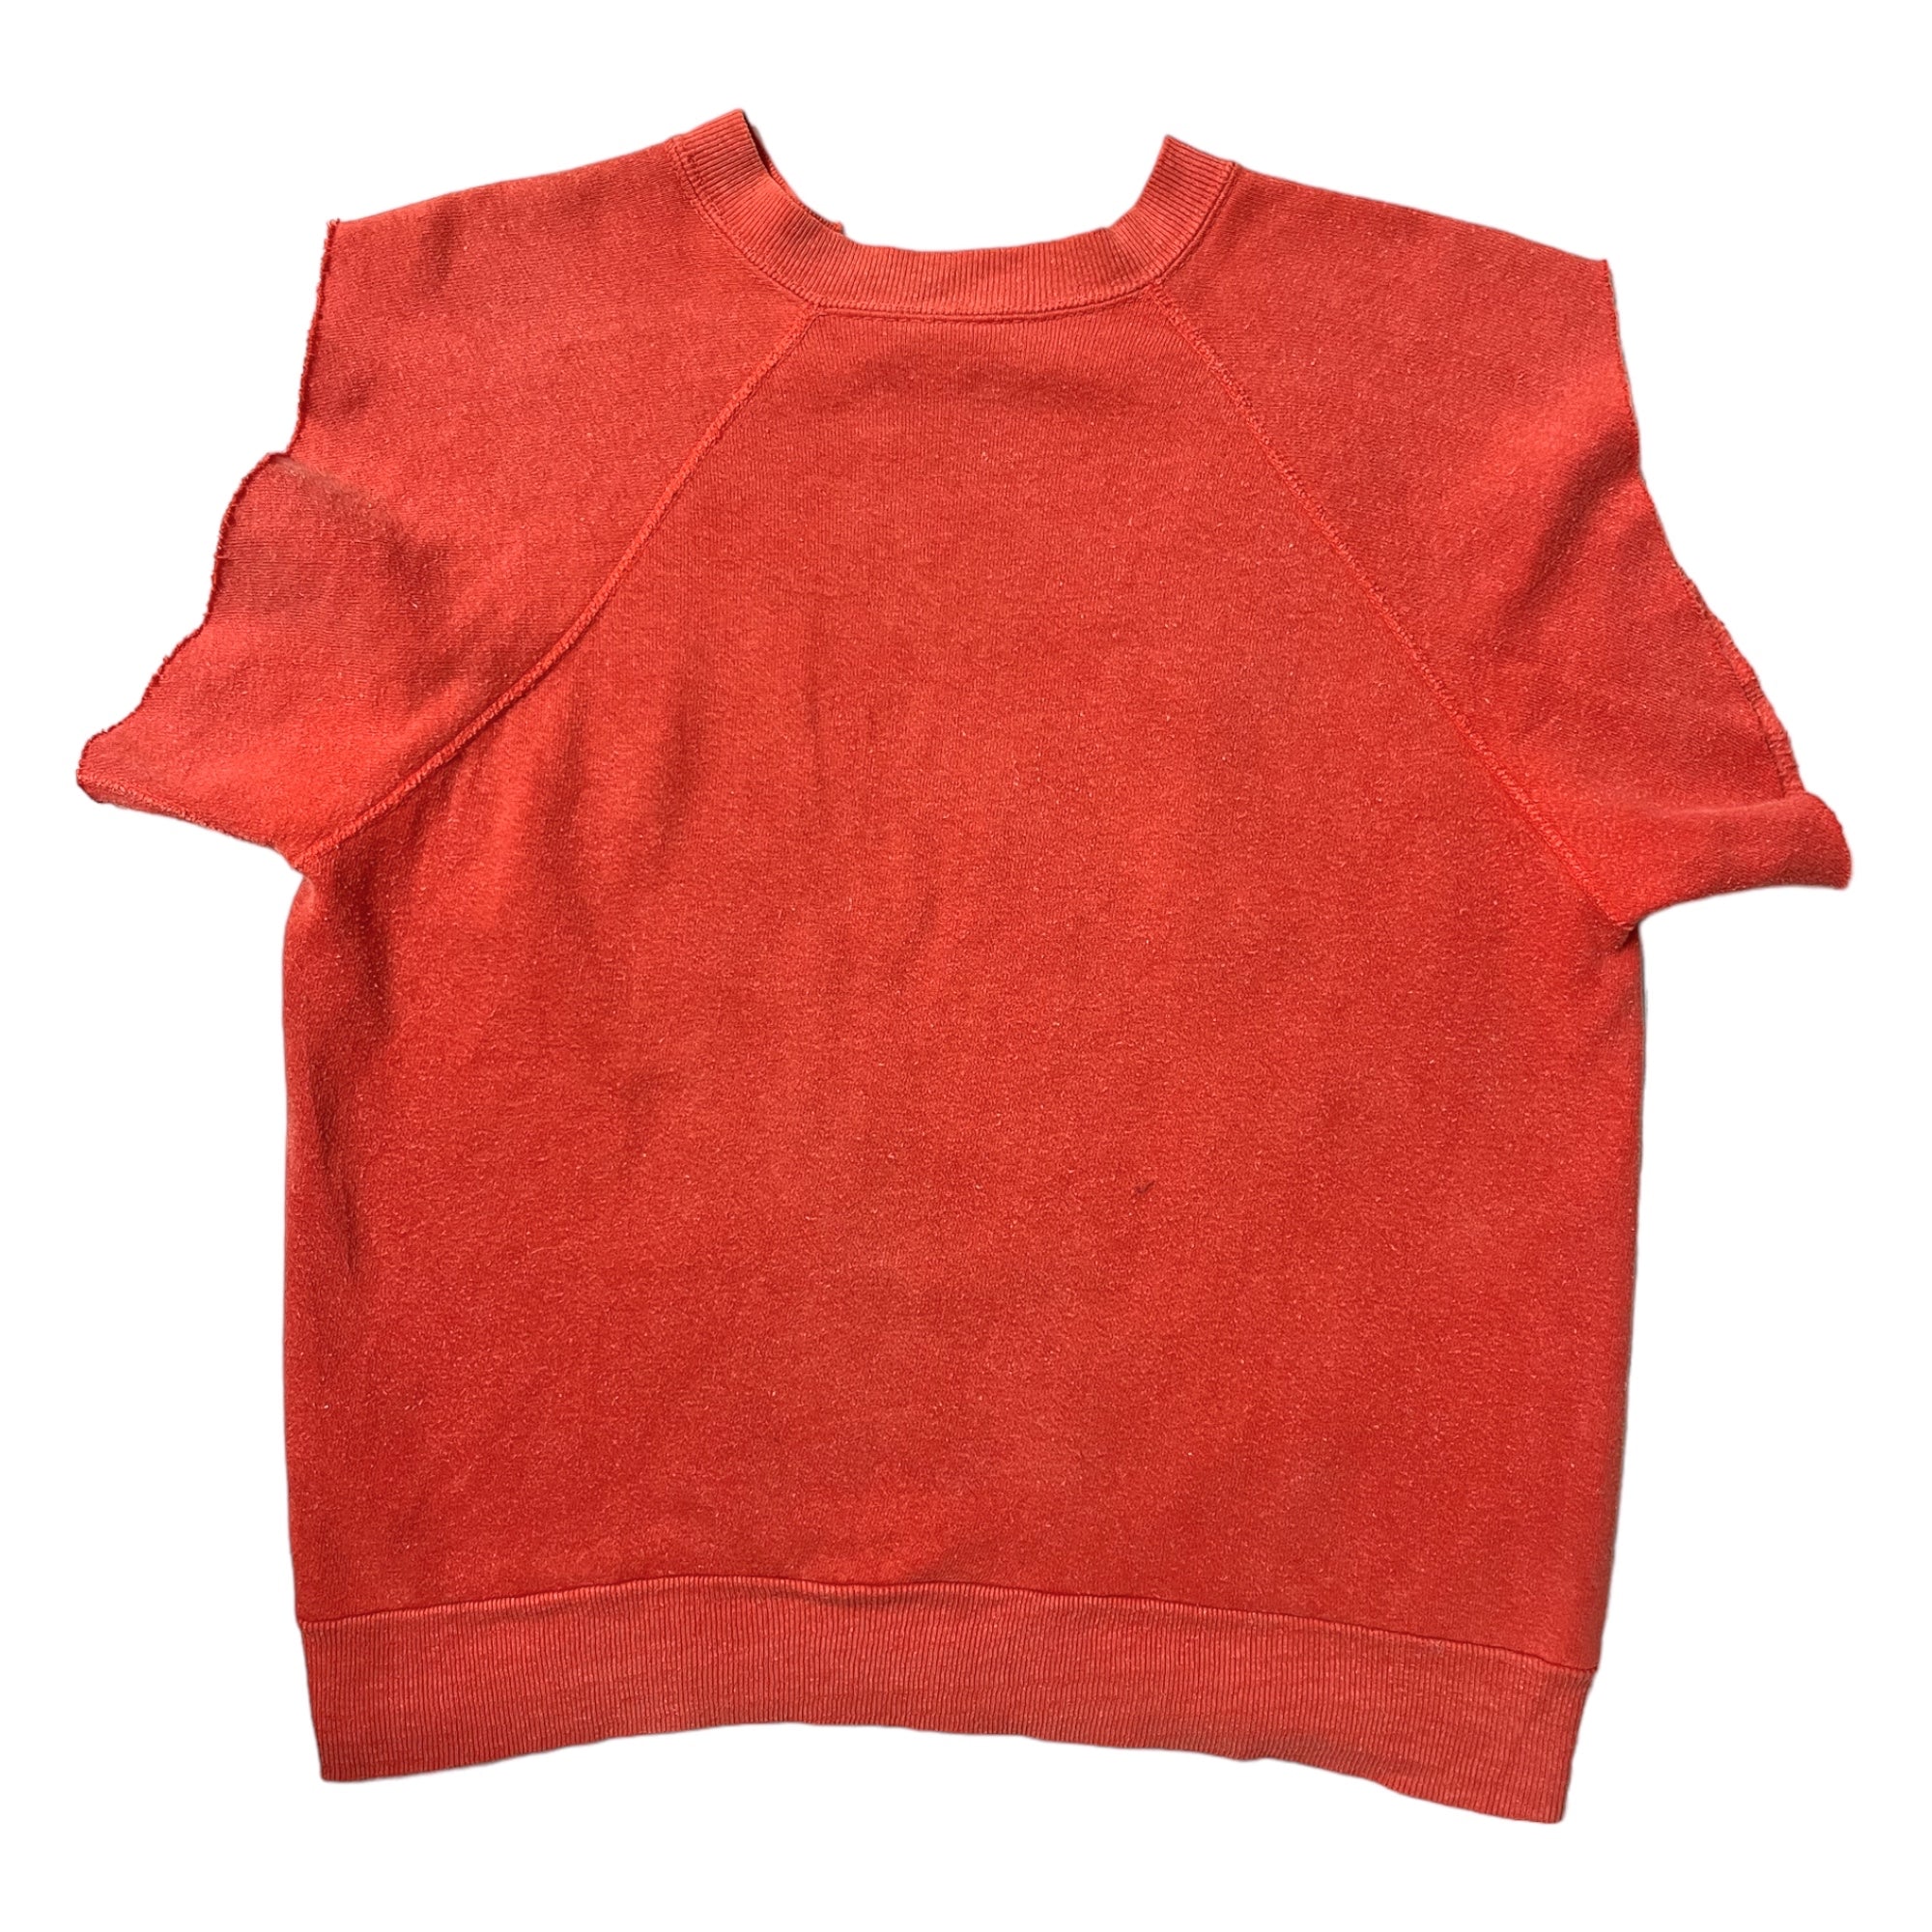 1970s Cutoff Raglan Crewneck Sweatshirt - Faded Orange - S/M